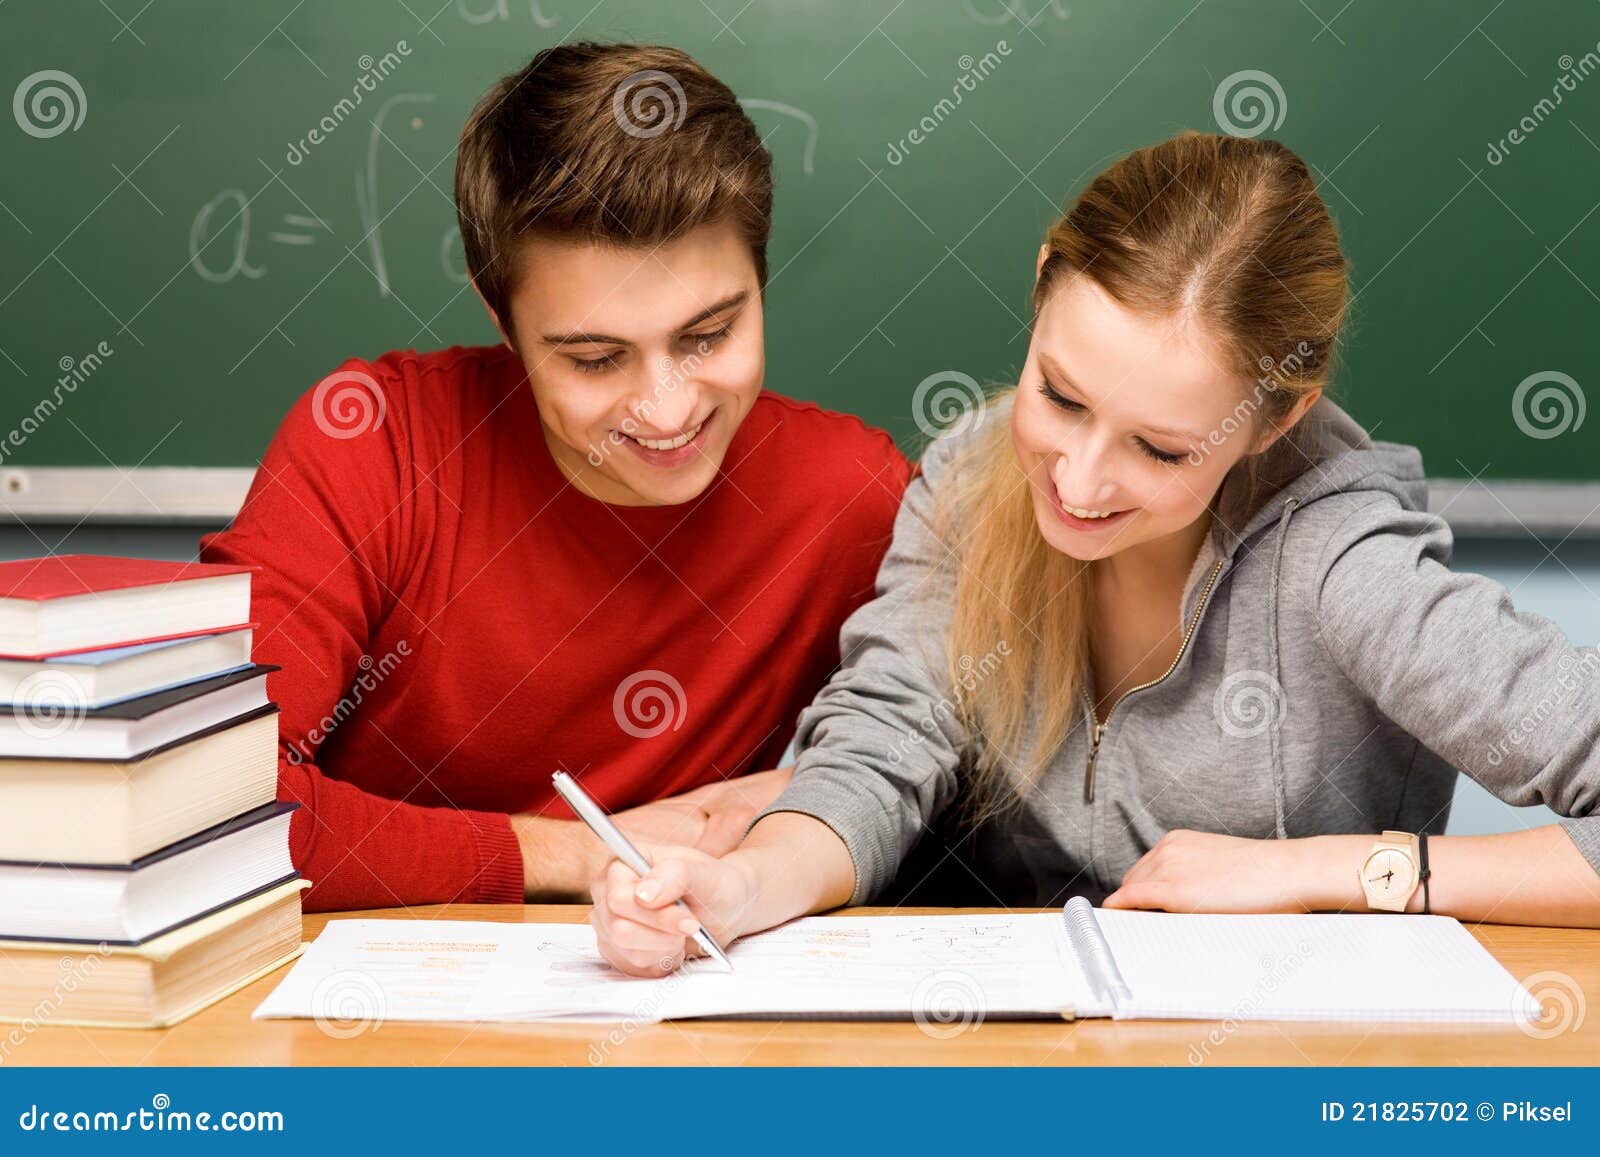 photos of students doing homework